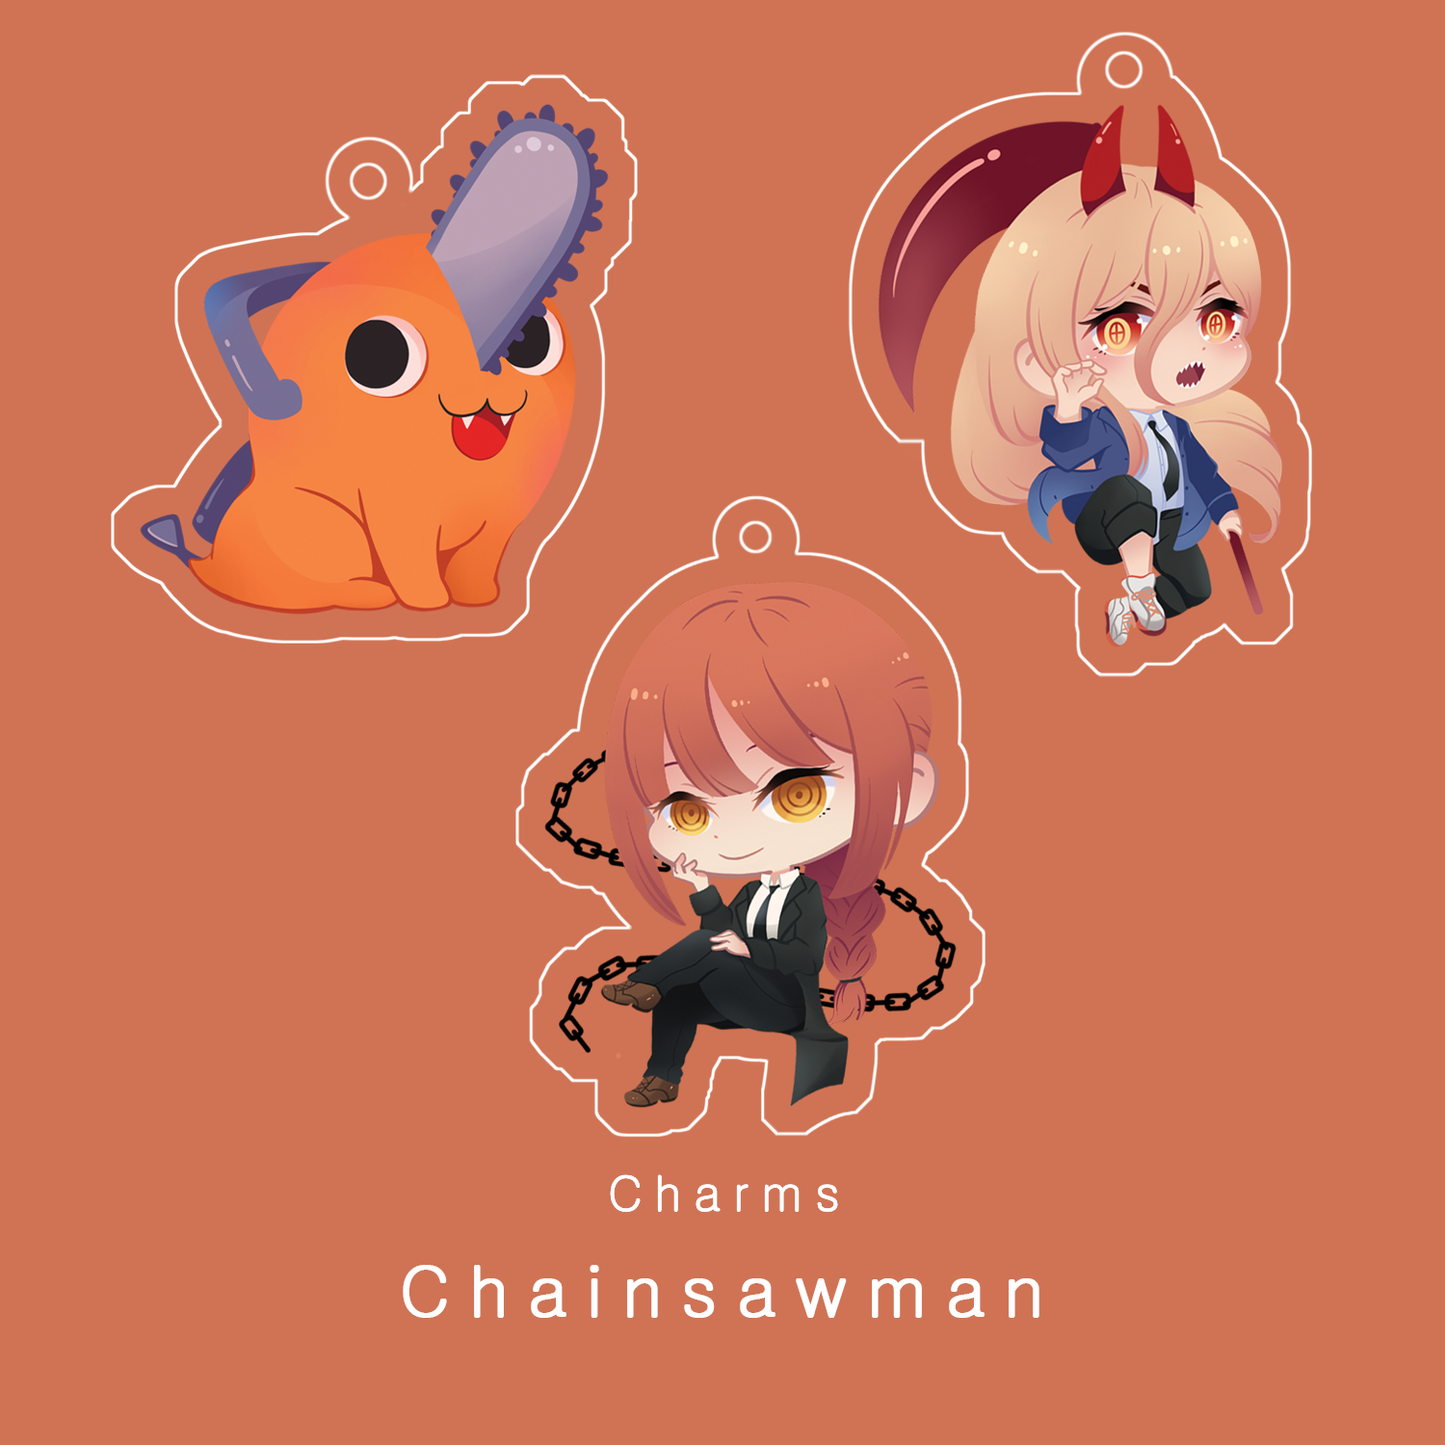 [Chainsaw man] charms